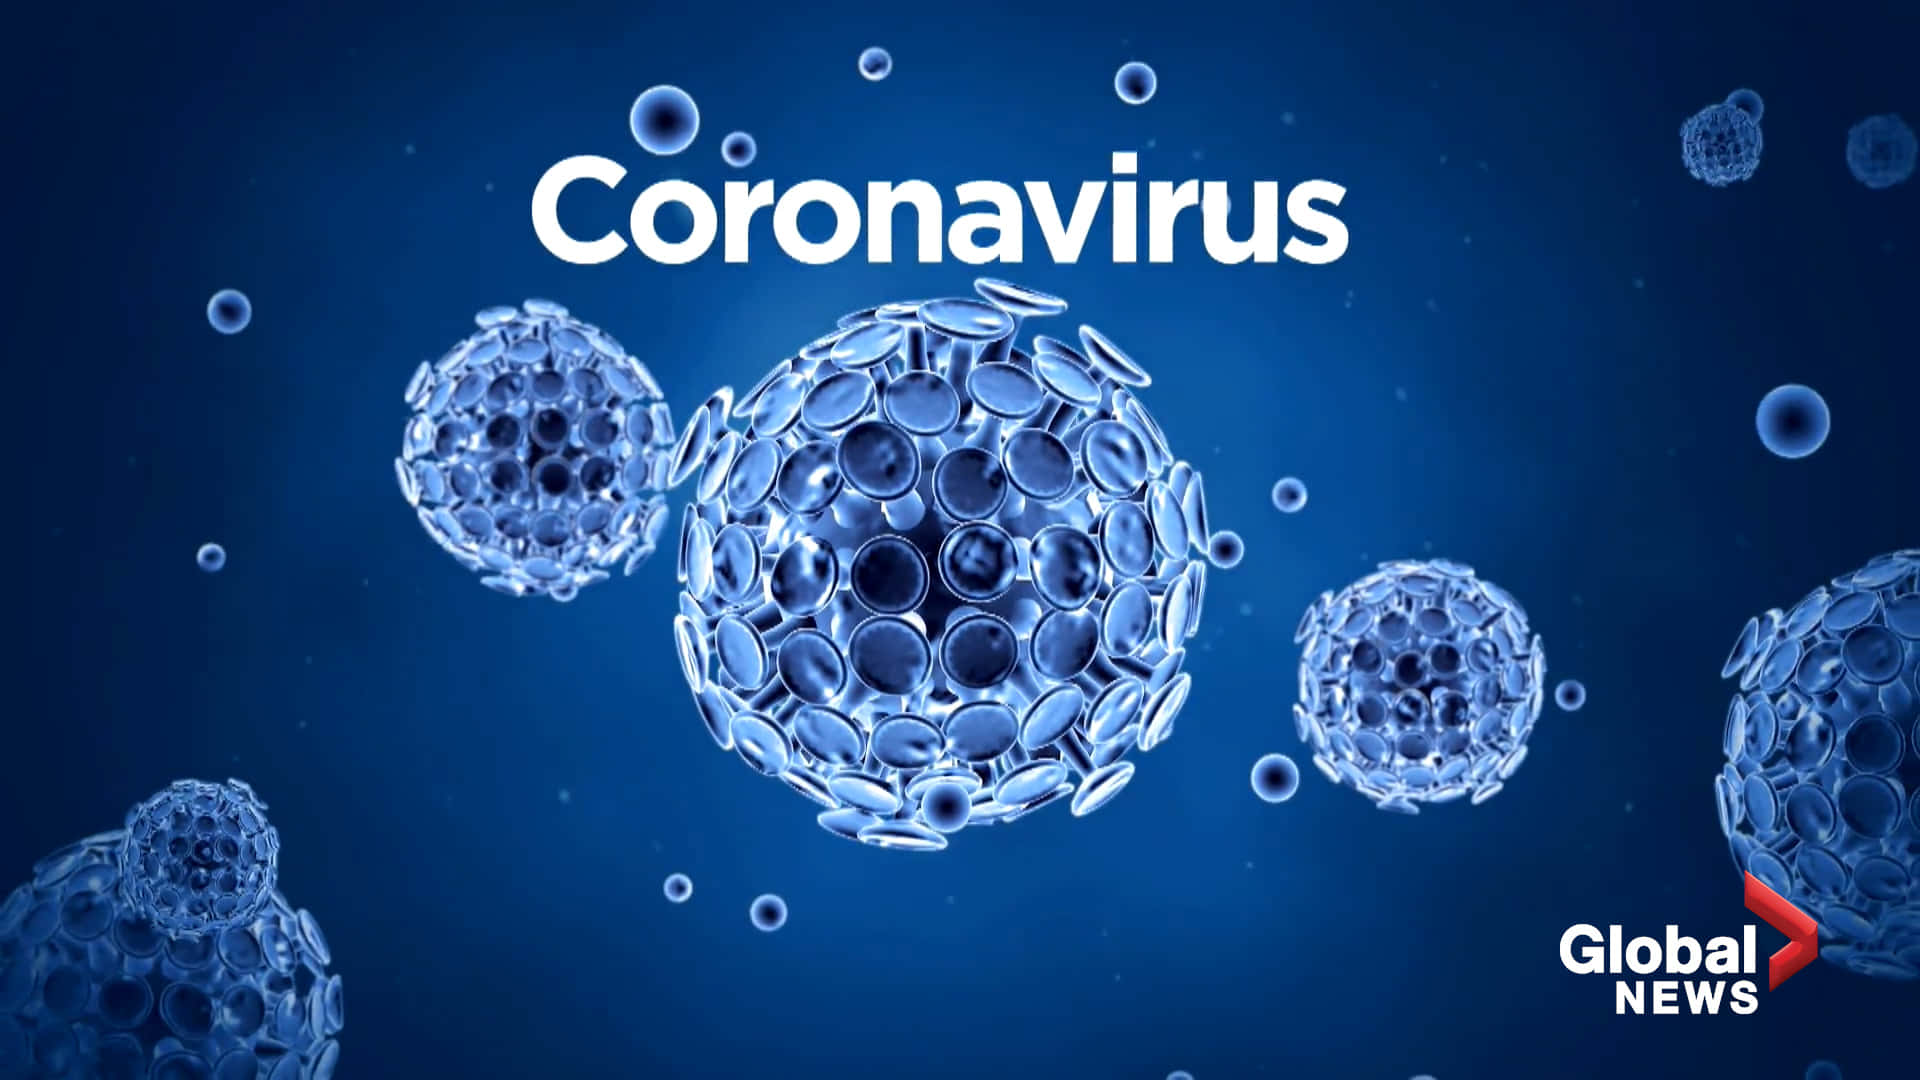 Coronavirussprider Sig I Europa